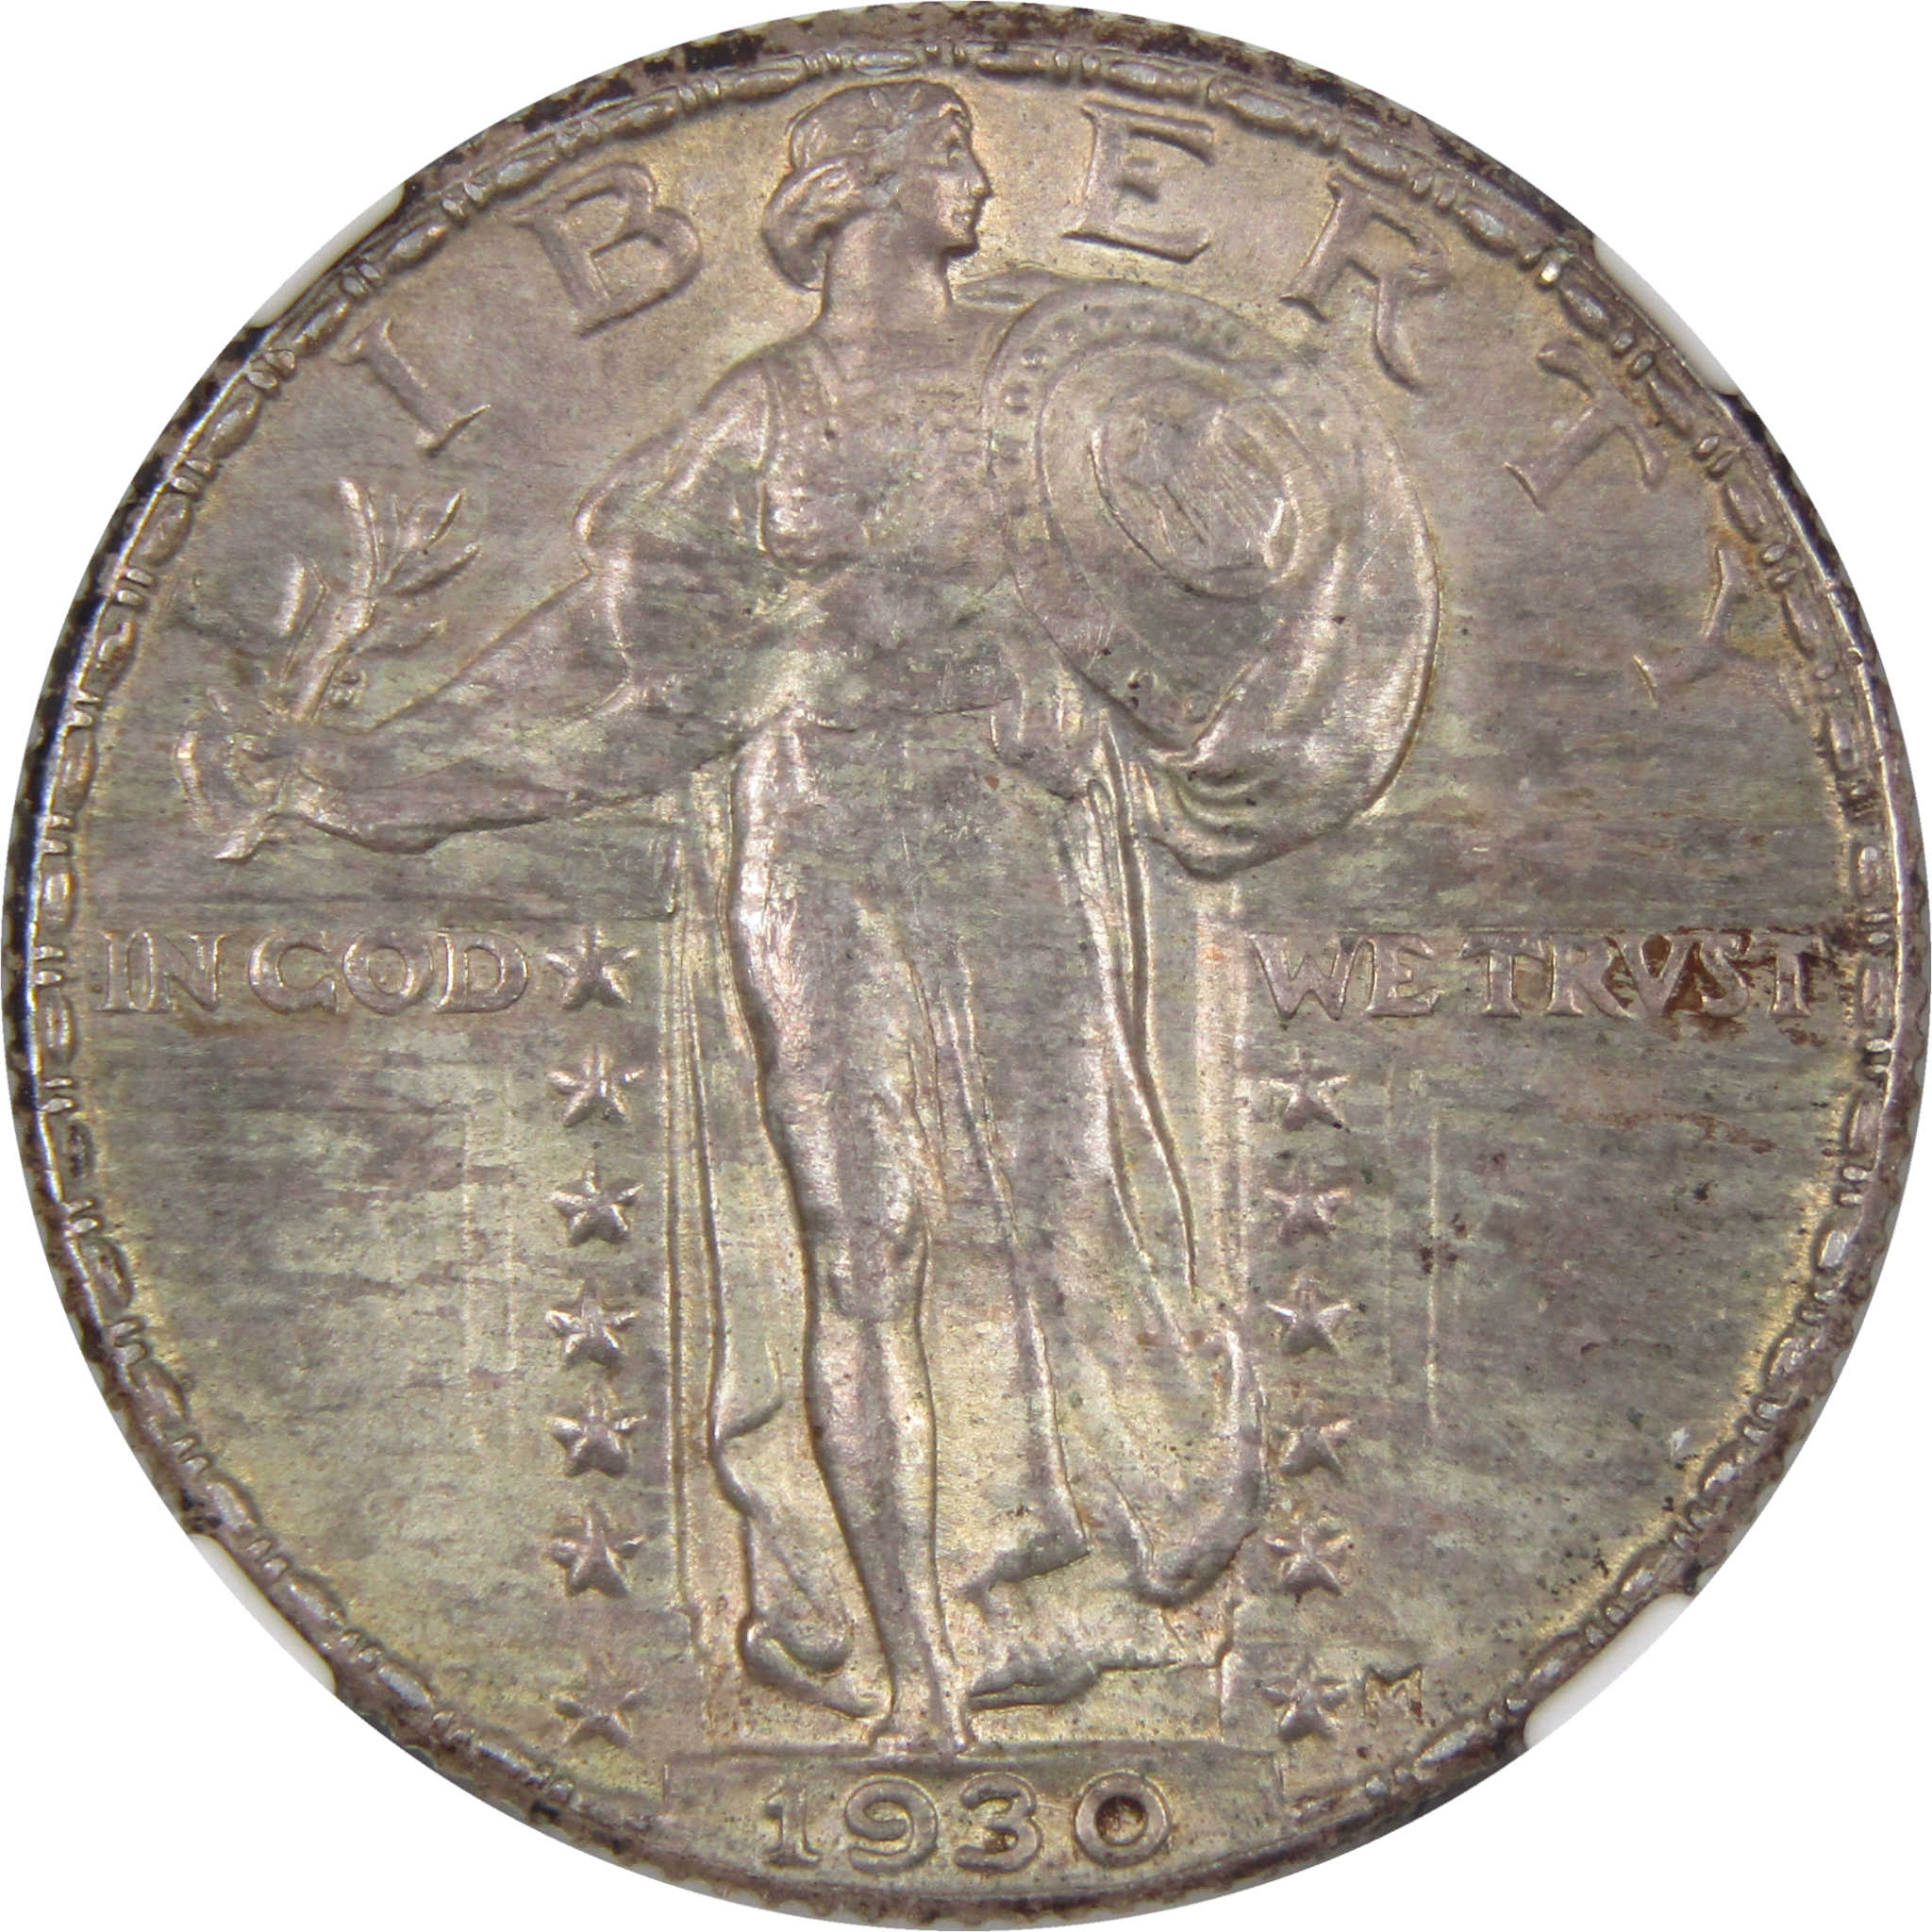 1930 Standing Liberty Quarter MS 63 FH NGC Silver SKU:I3054